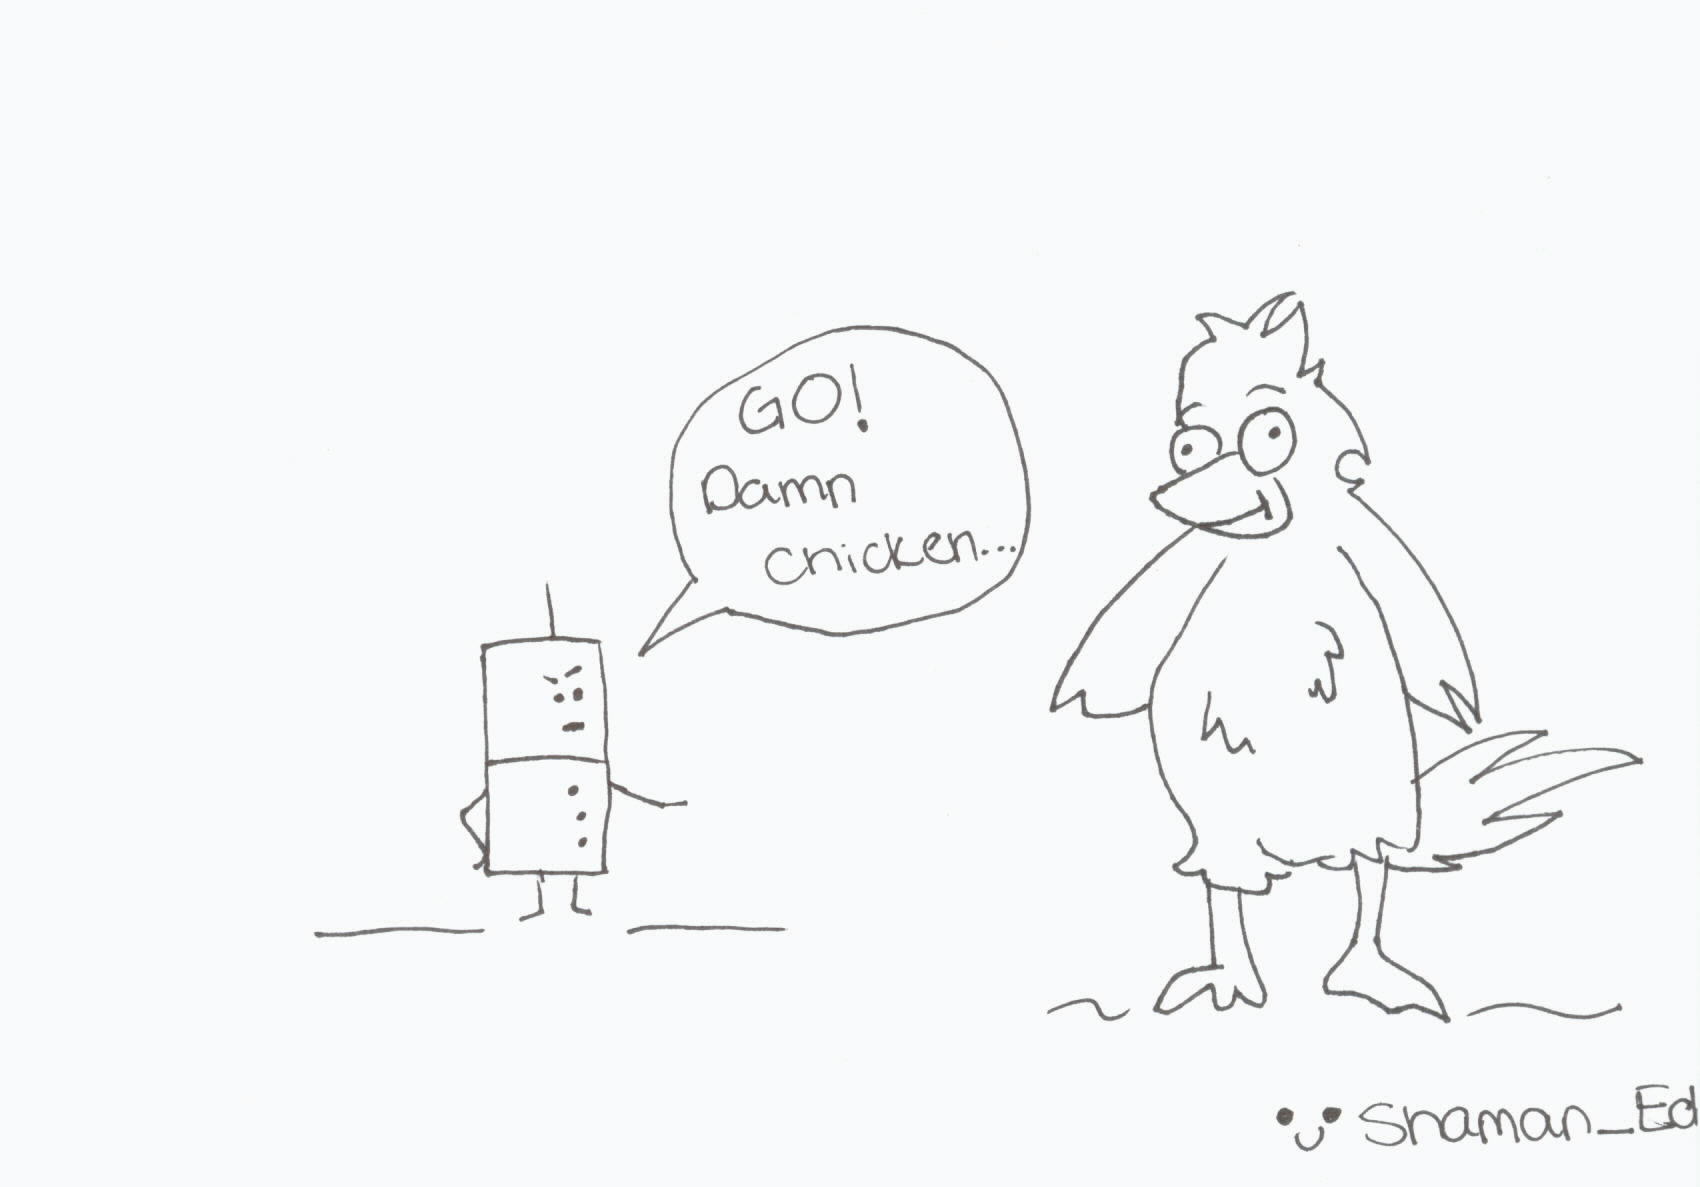 Stupid chicken... by Shaman_Ed